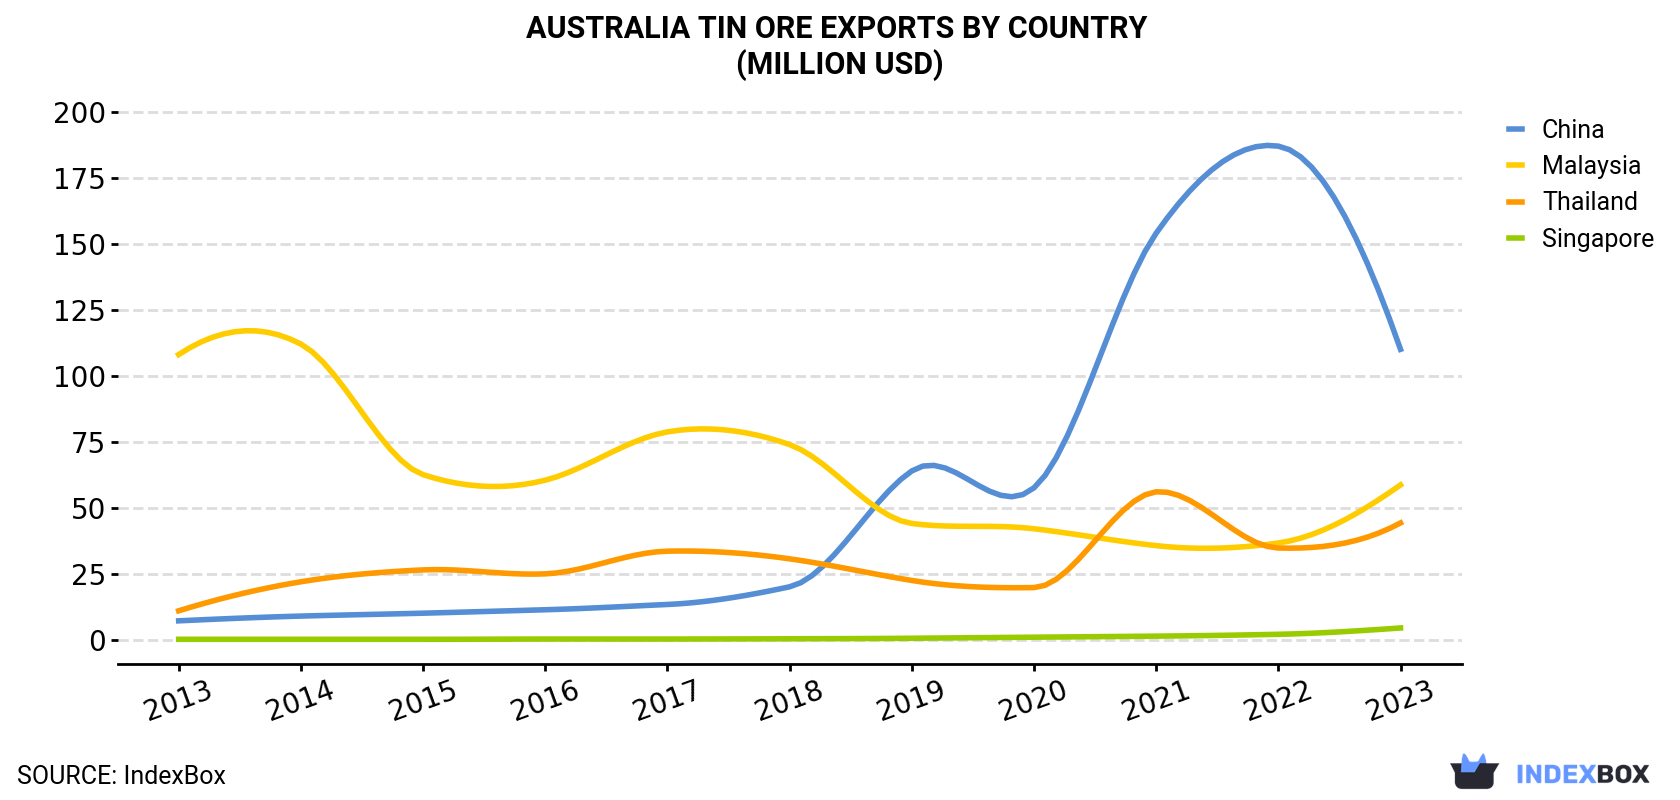 Australia Tin Ore Exports By Country (Million USD)